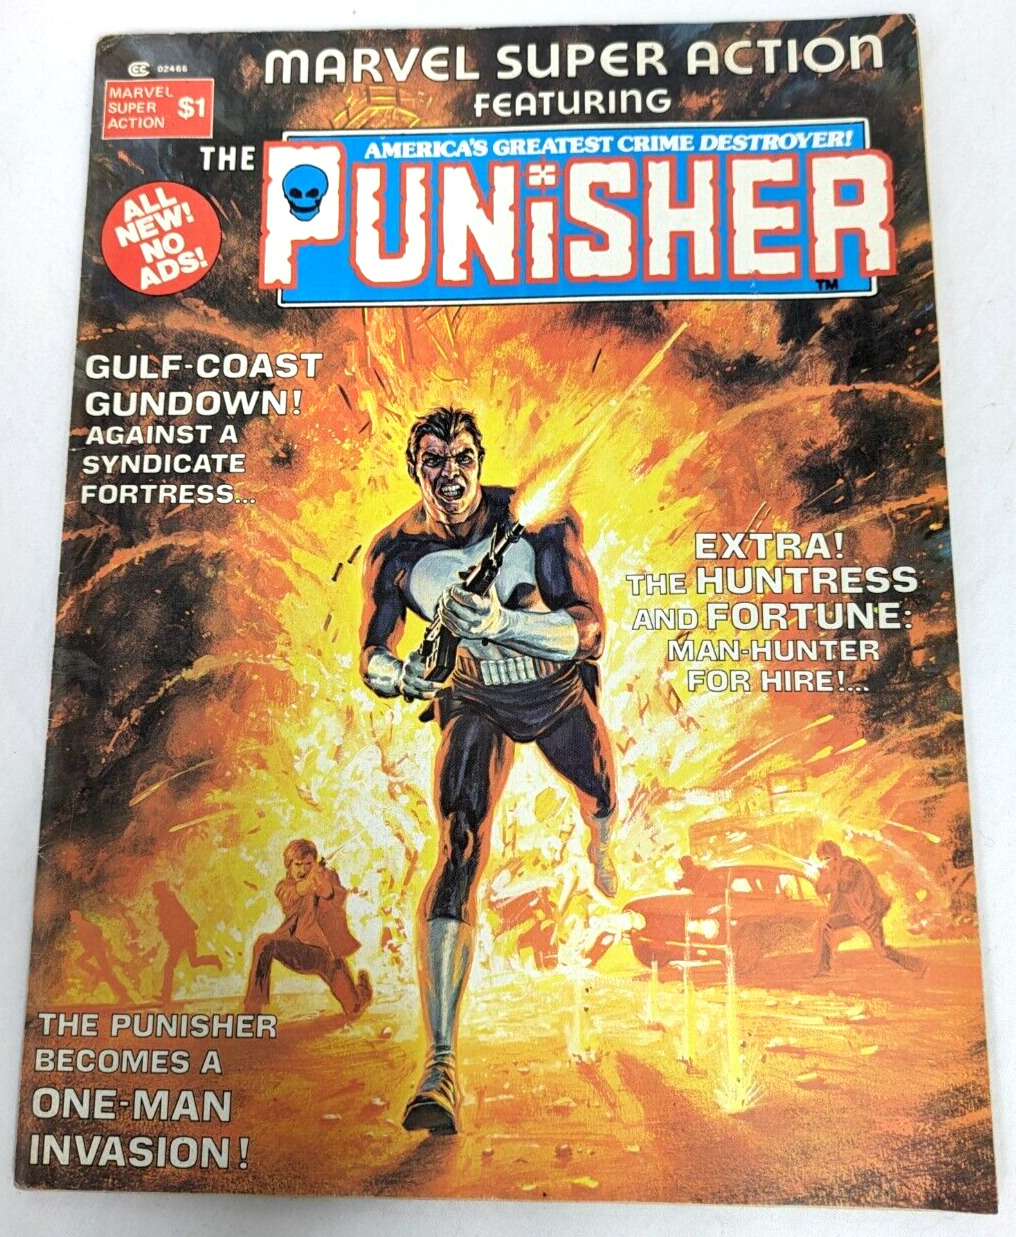 Marvel Super Action # 1 Featuring THE PUNISHER 1976 Bronze Age Comic Magazine SZ